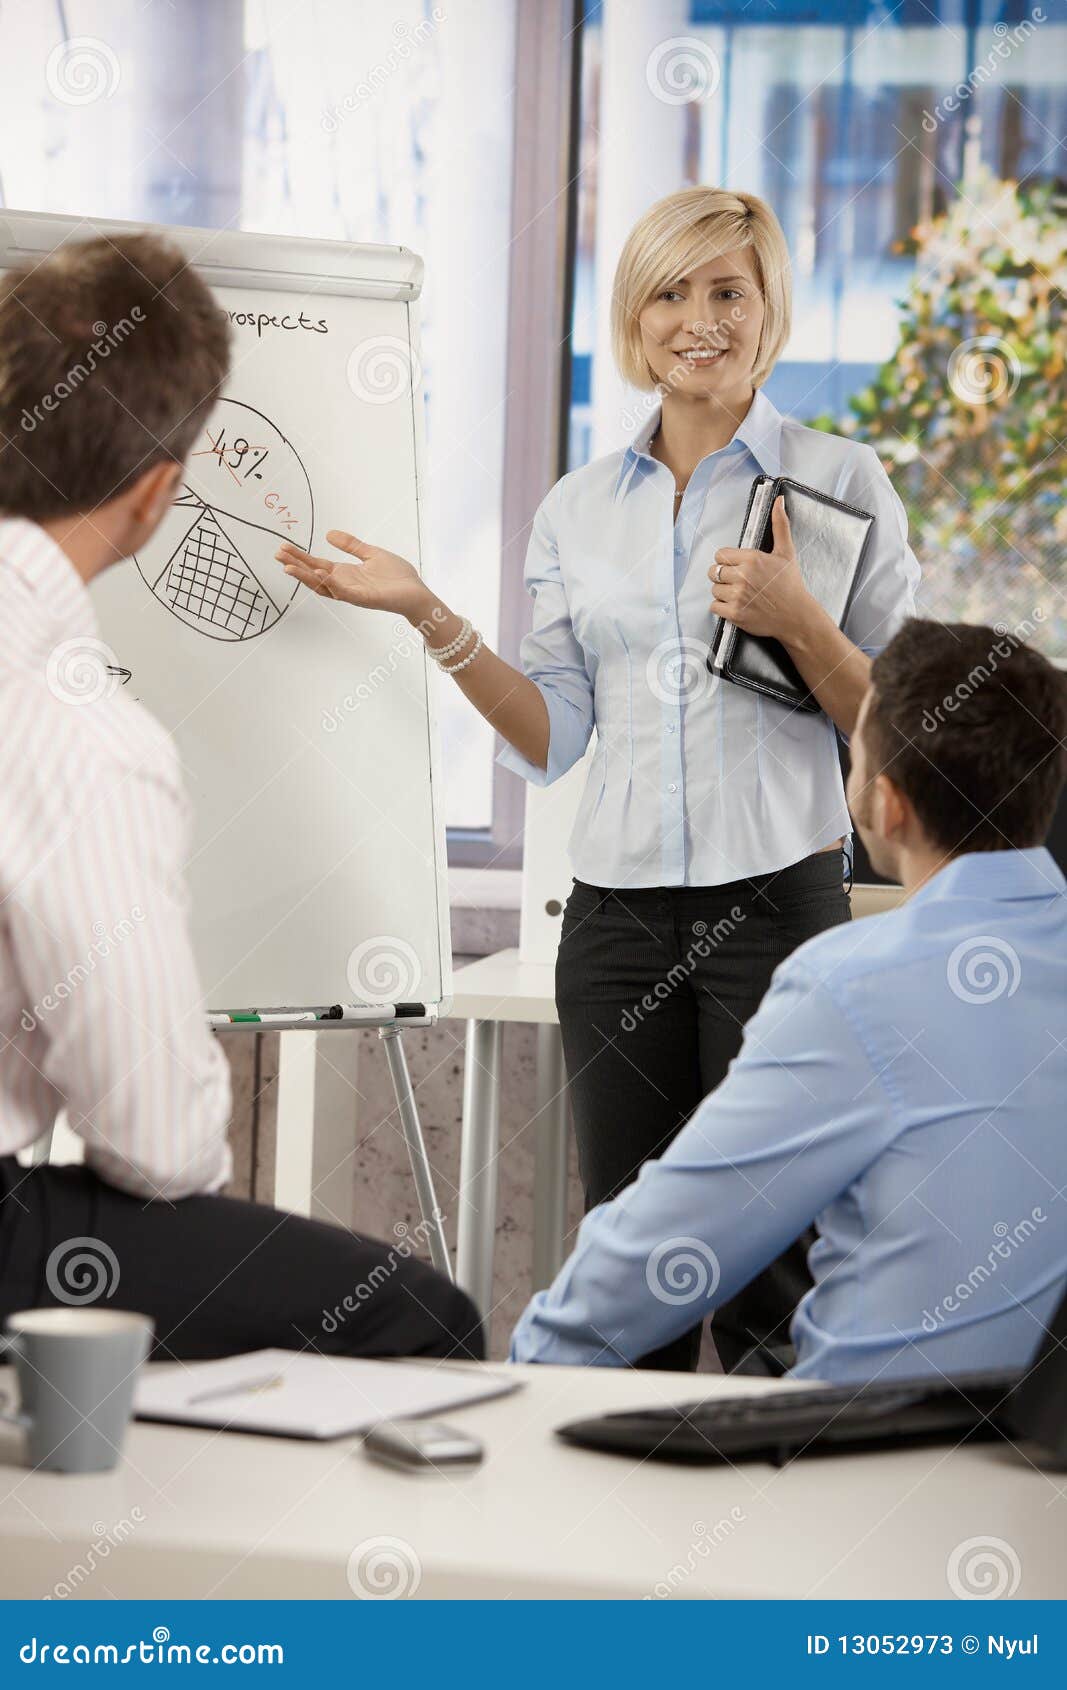 businesswoman presenting idea in office